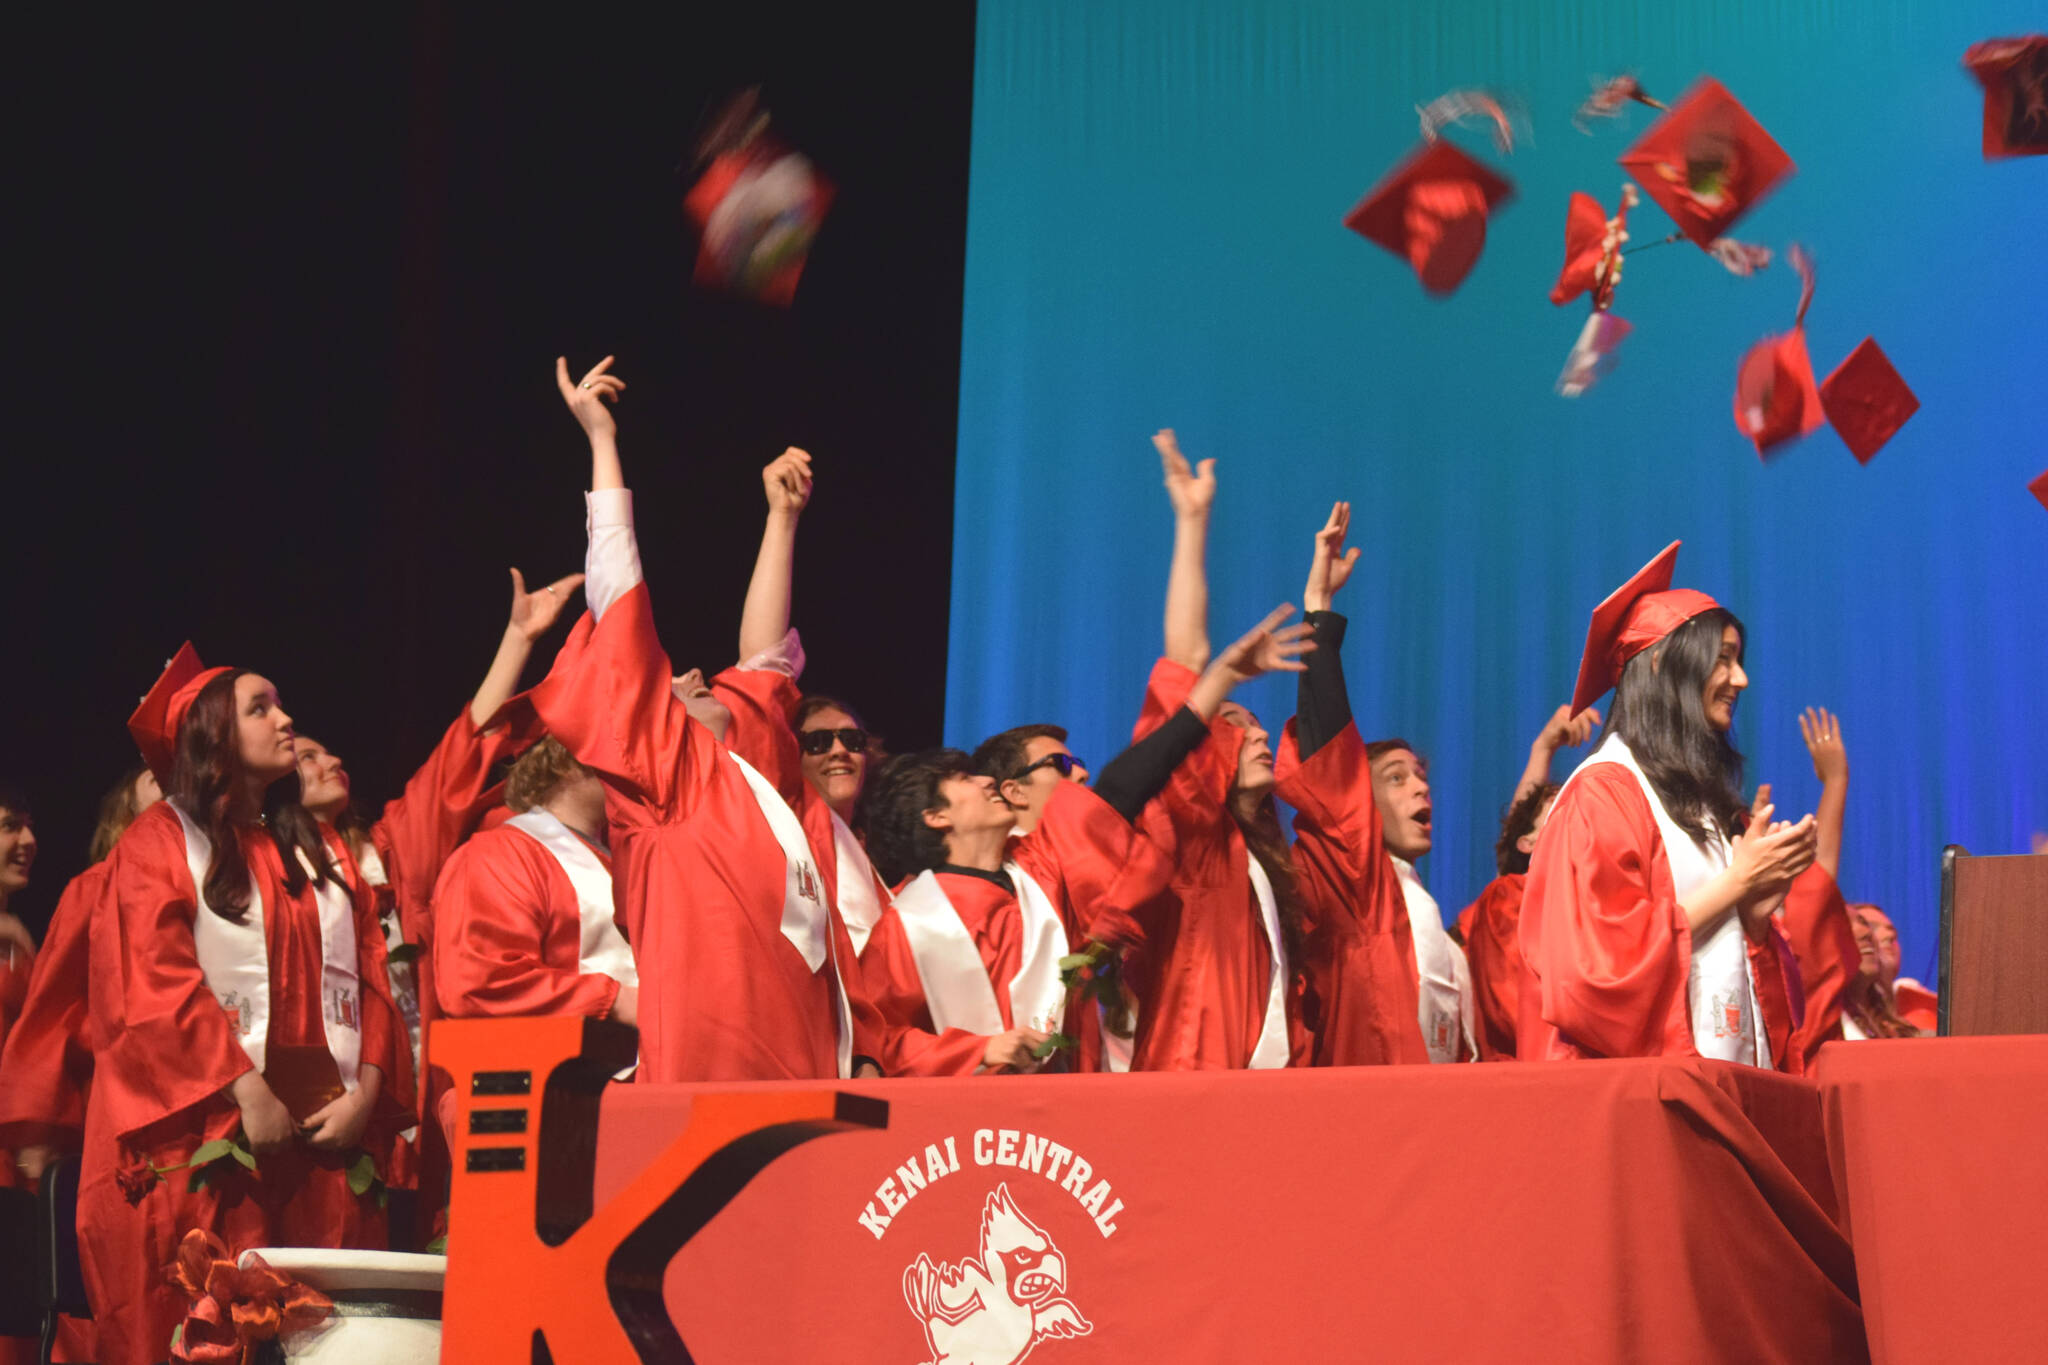 Kenai Central High School graduates throw caps at the end of their commencement ceremony on Tuesday, May 17, 2022 in Kenai, Alaska. (Ashlyn O’Hara/Peninsula Clarion)